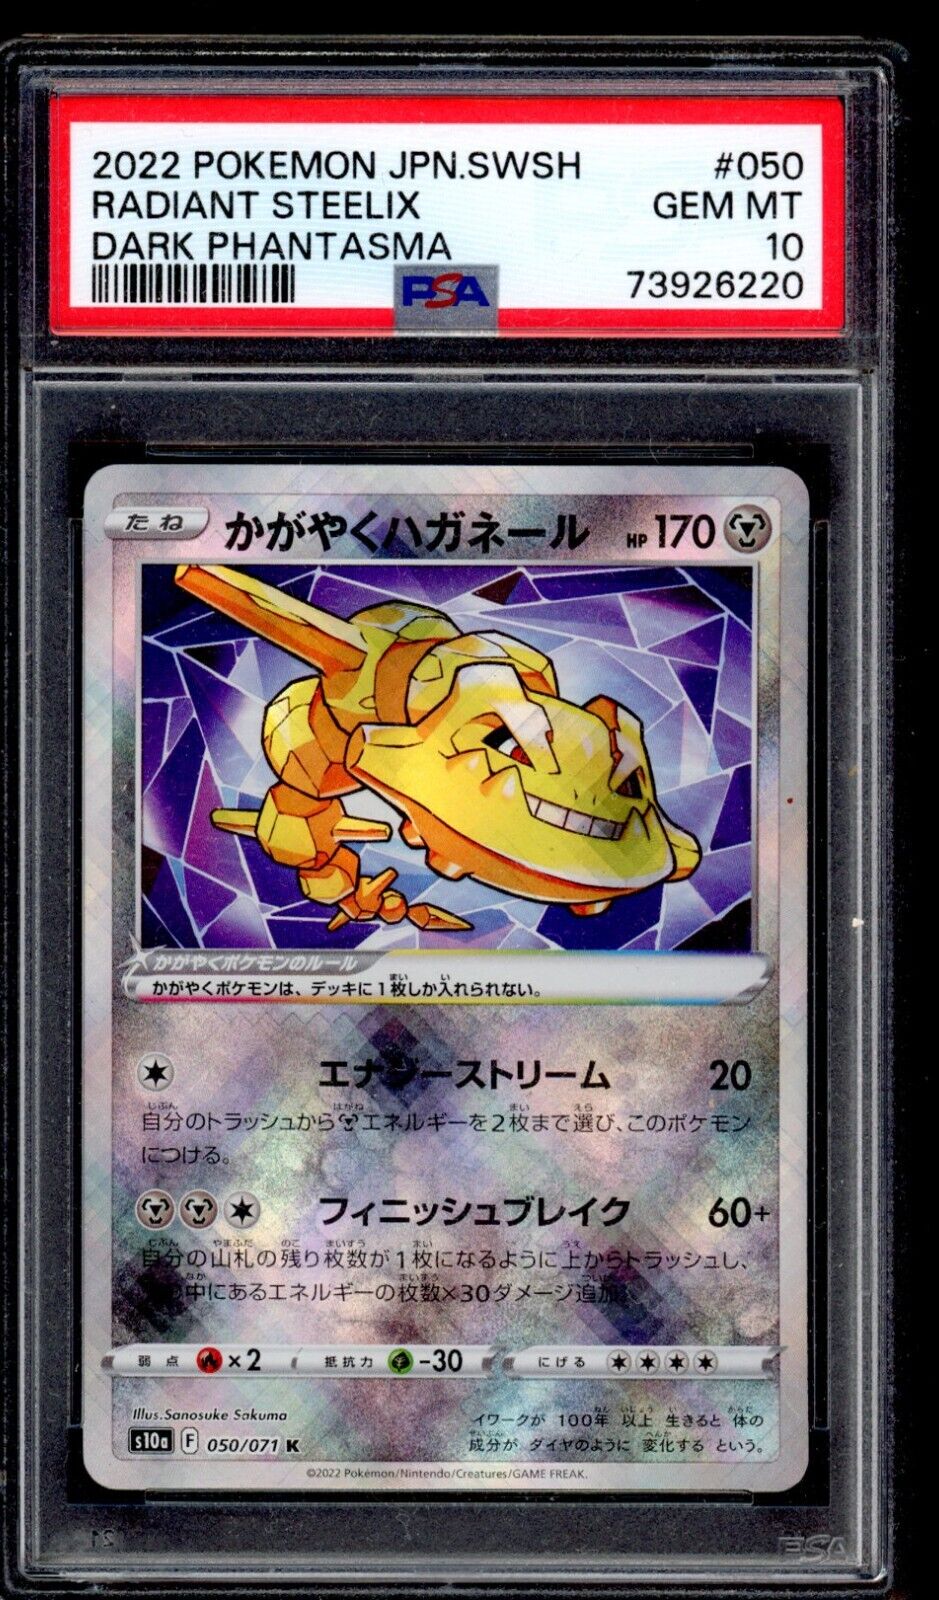 PSA 10 Radiant Steelix 2022 Pokemon Cards10a 050/071 Dark Phantasma